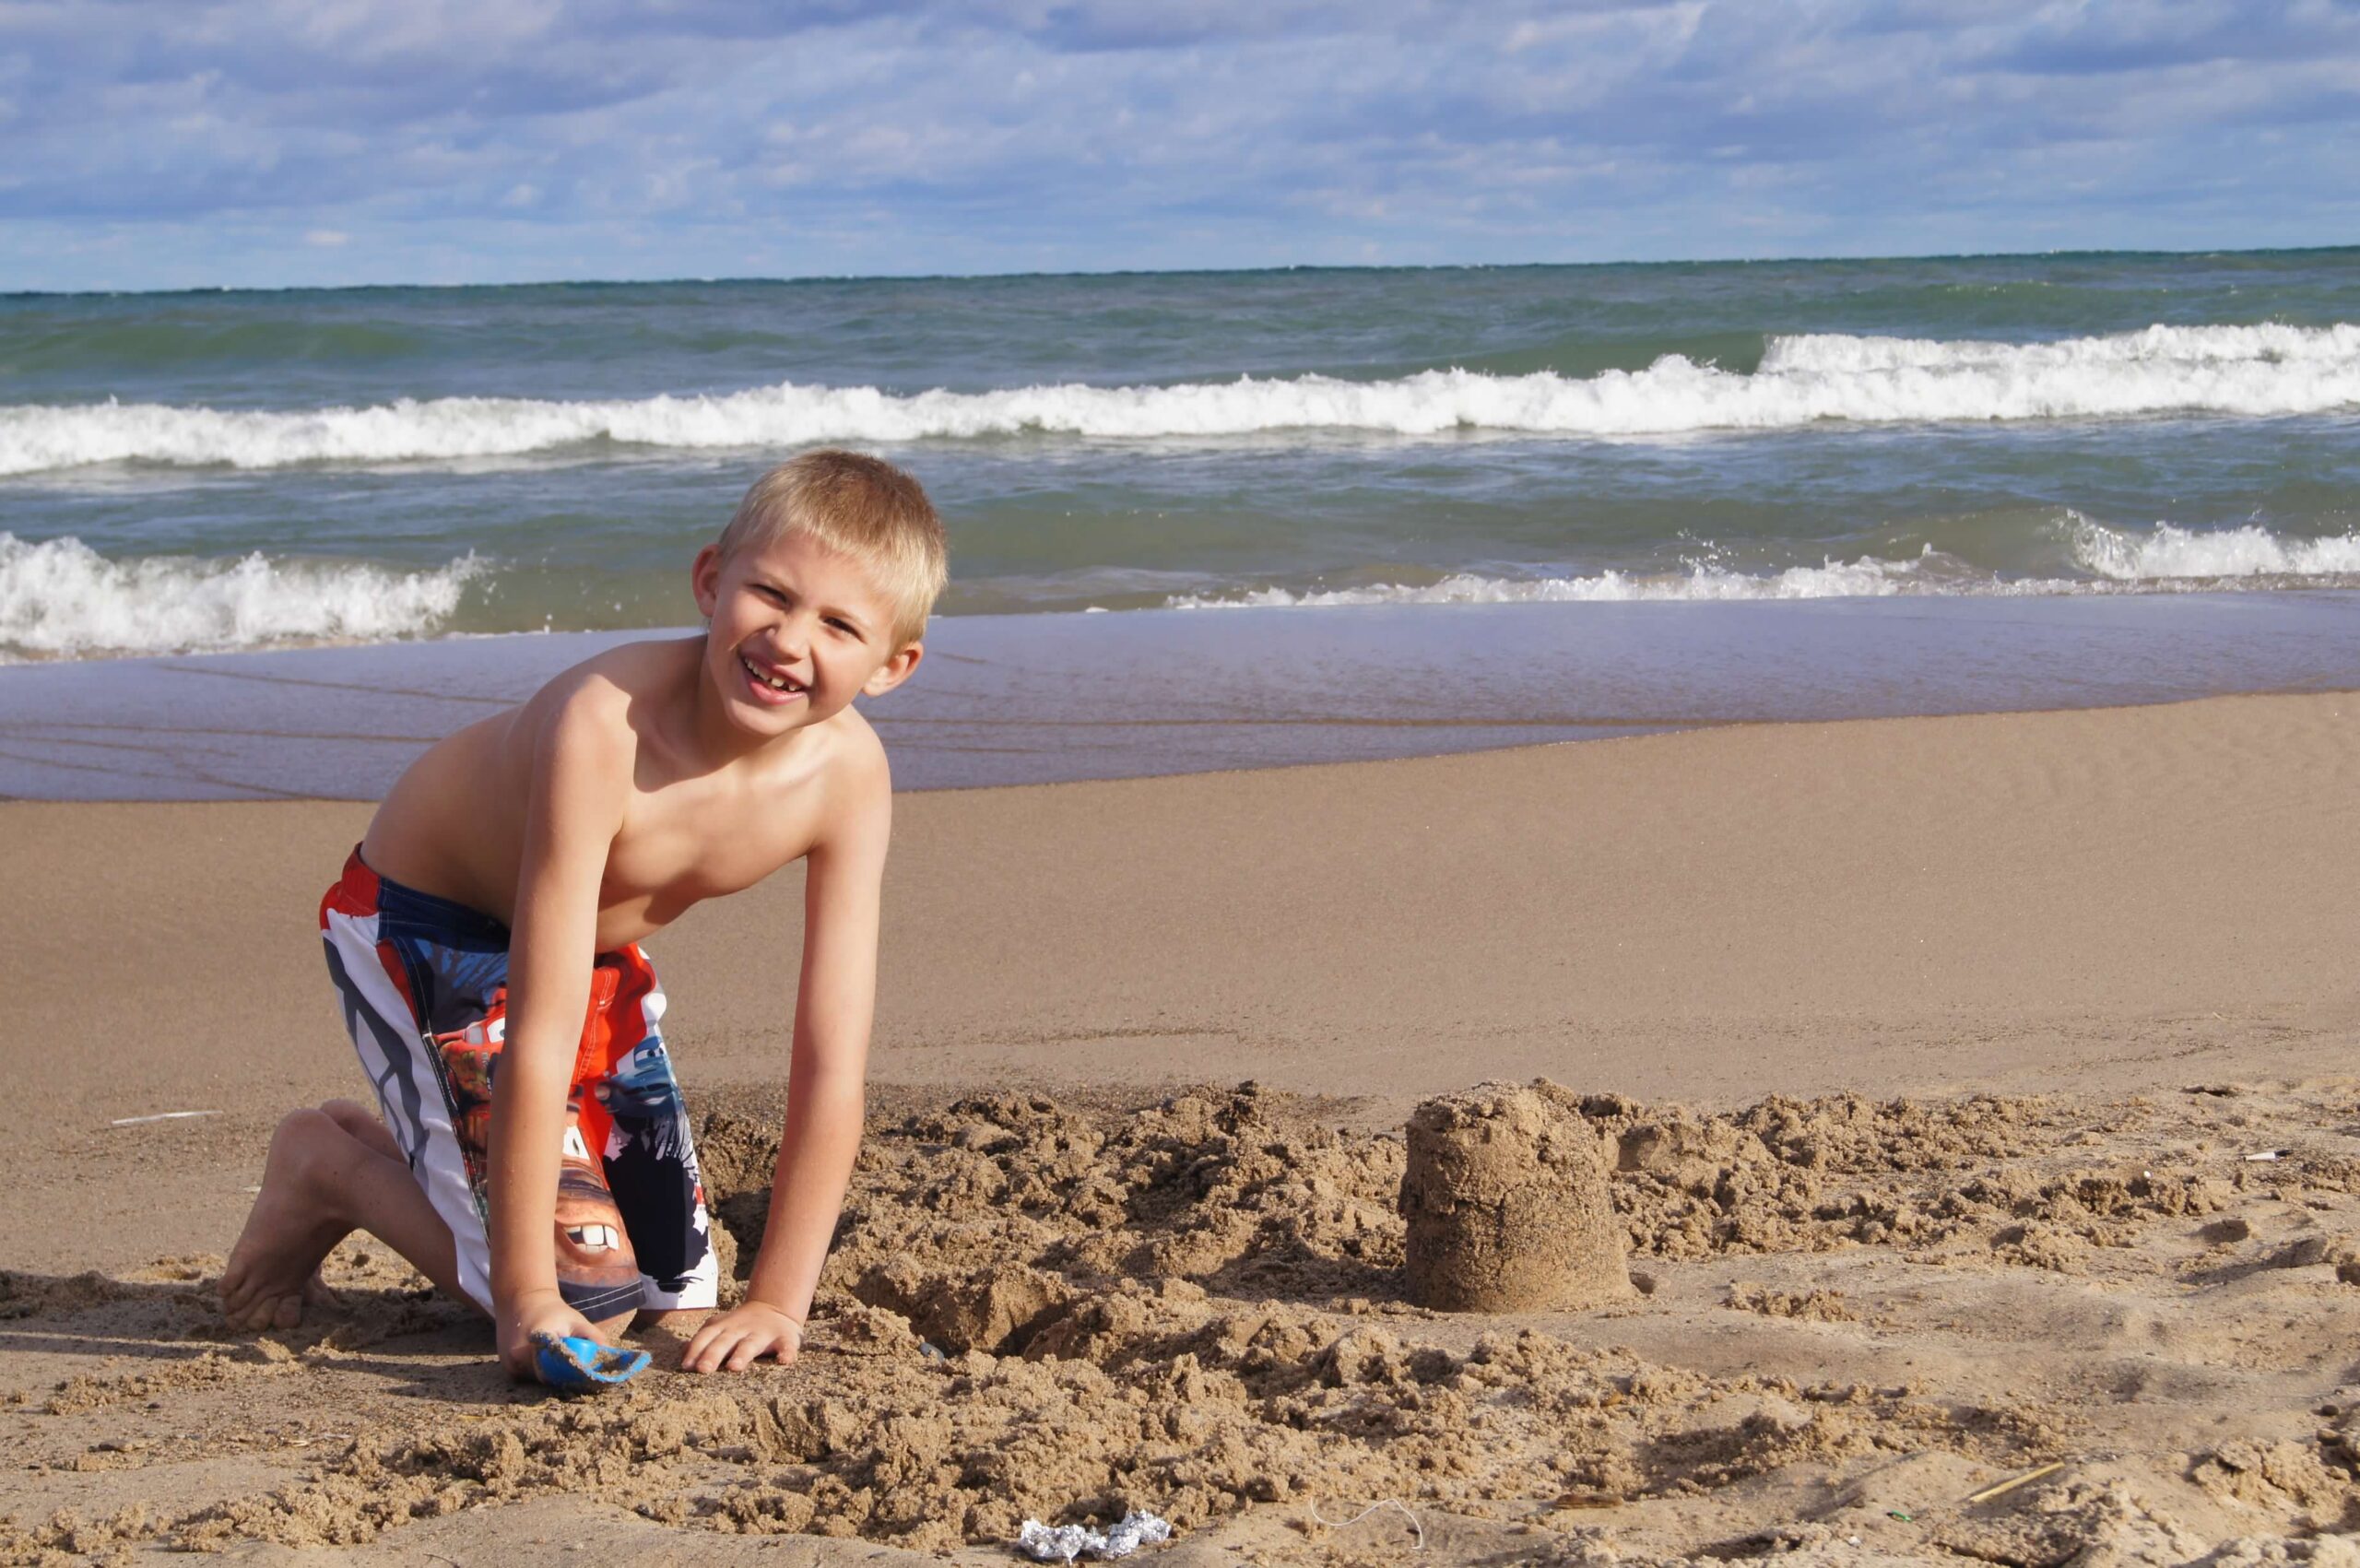 boy building sandcastle on beach with ocean waves behind